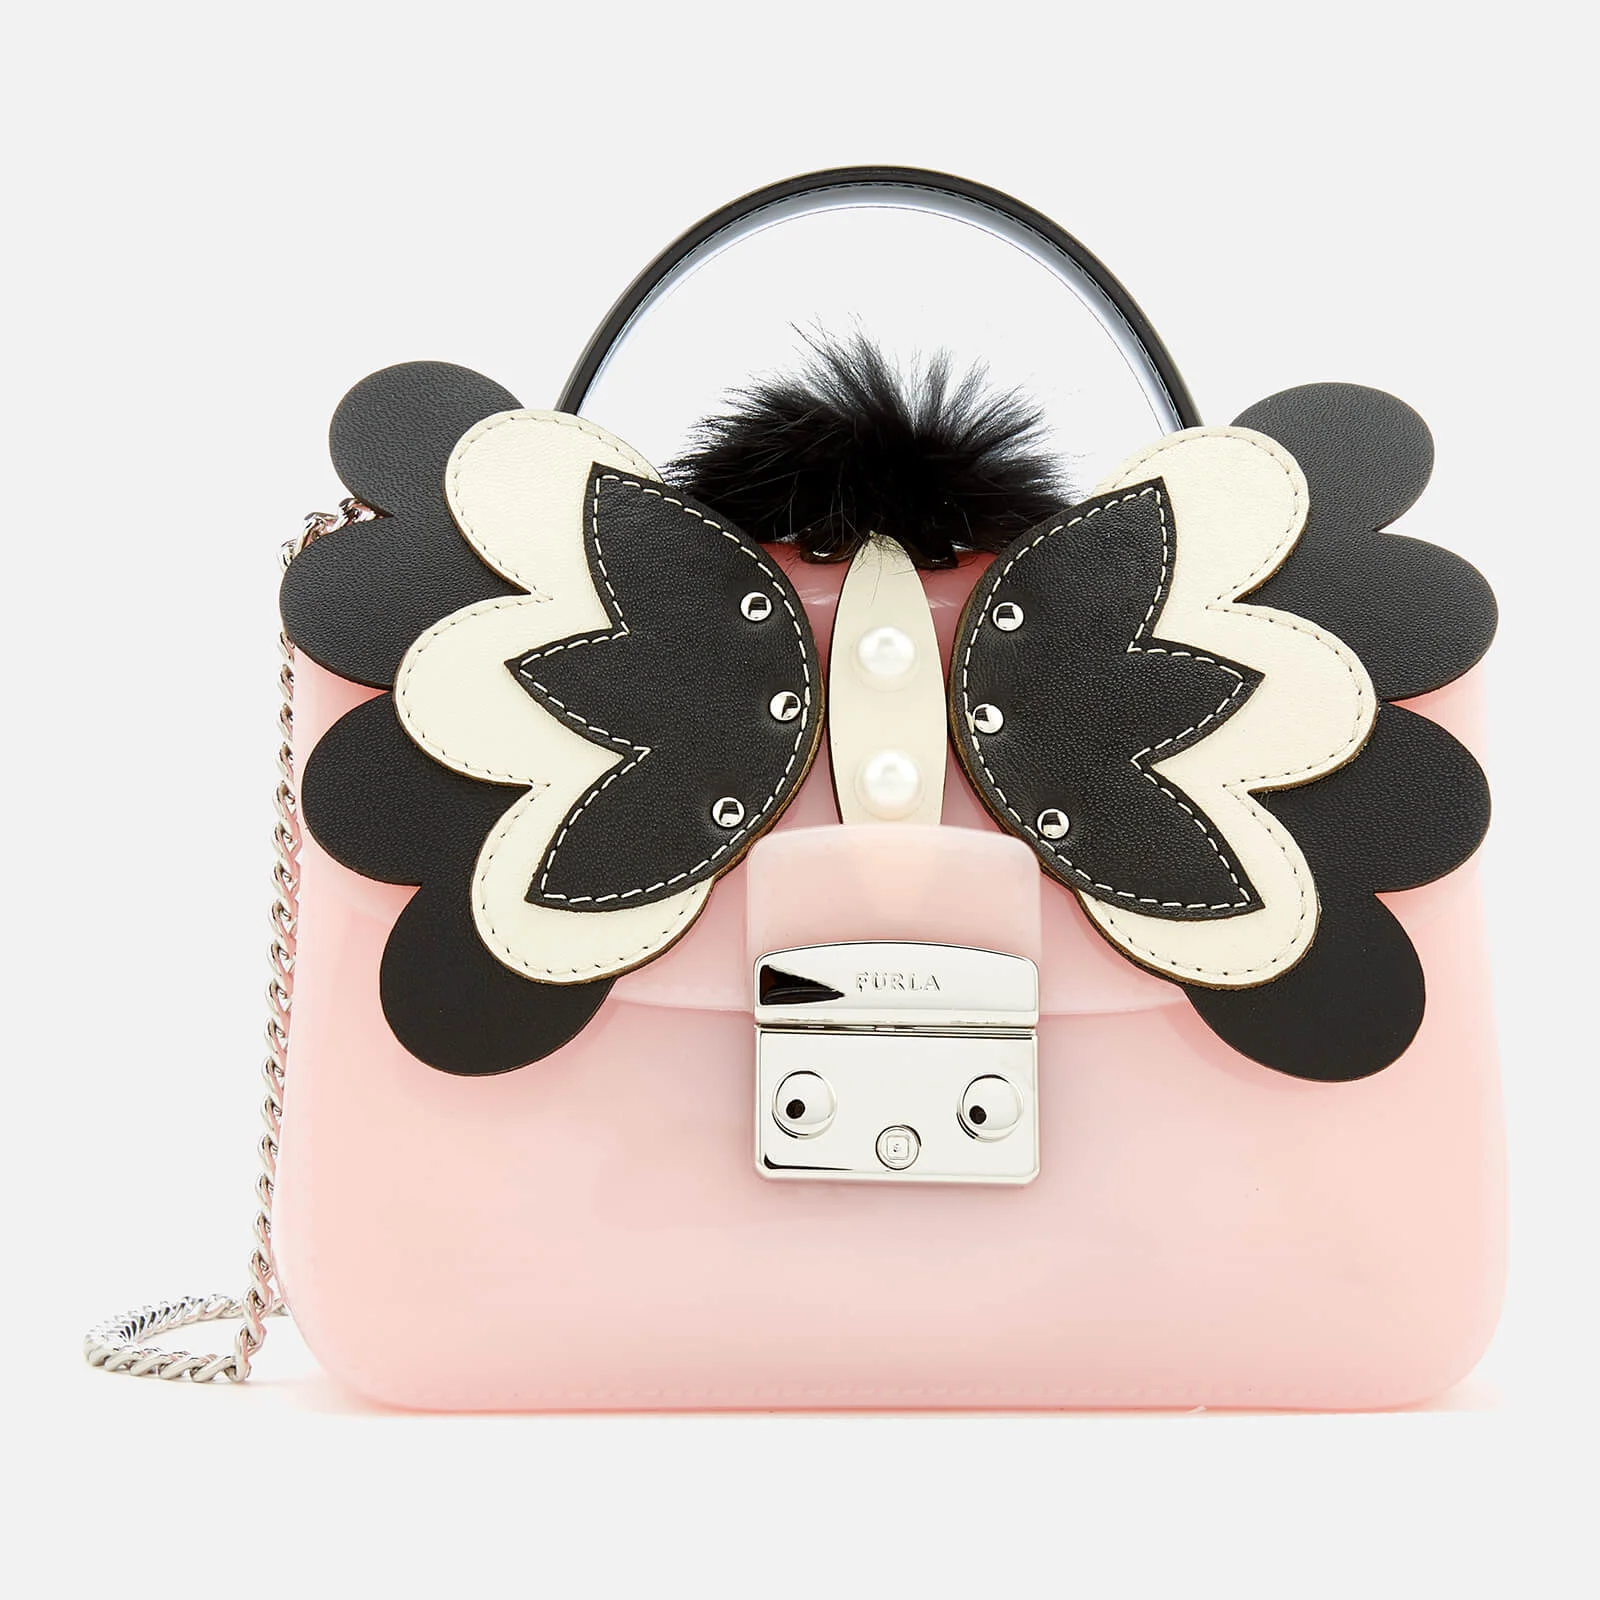 Furla Women's Candy Melita Meringa Mini Cross Body Bag - Light Pink/Black Image 1